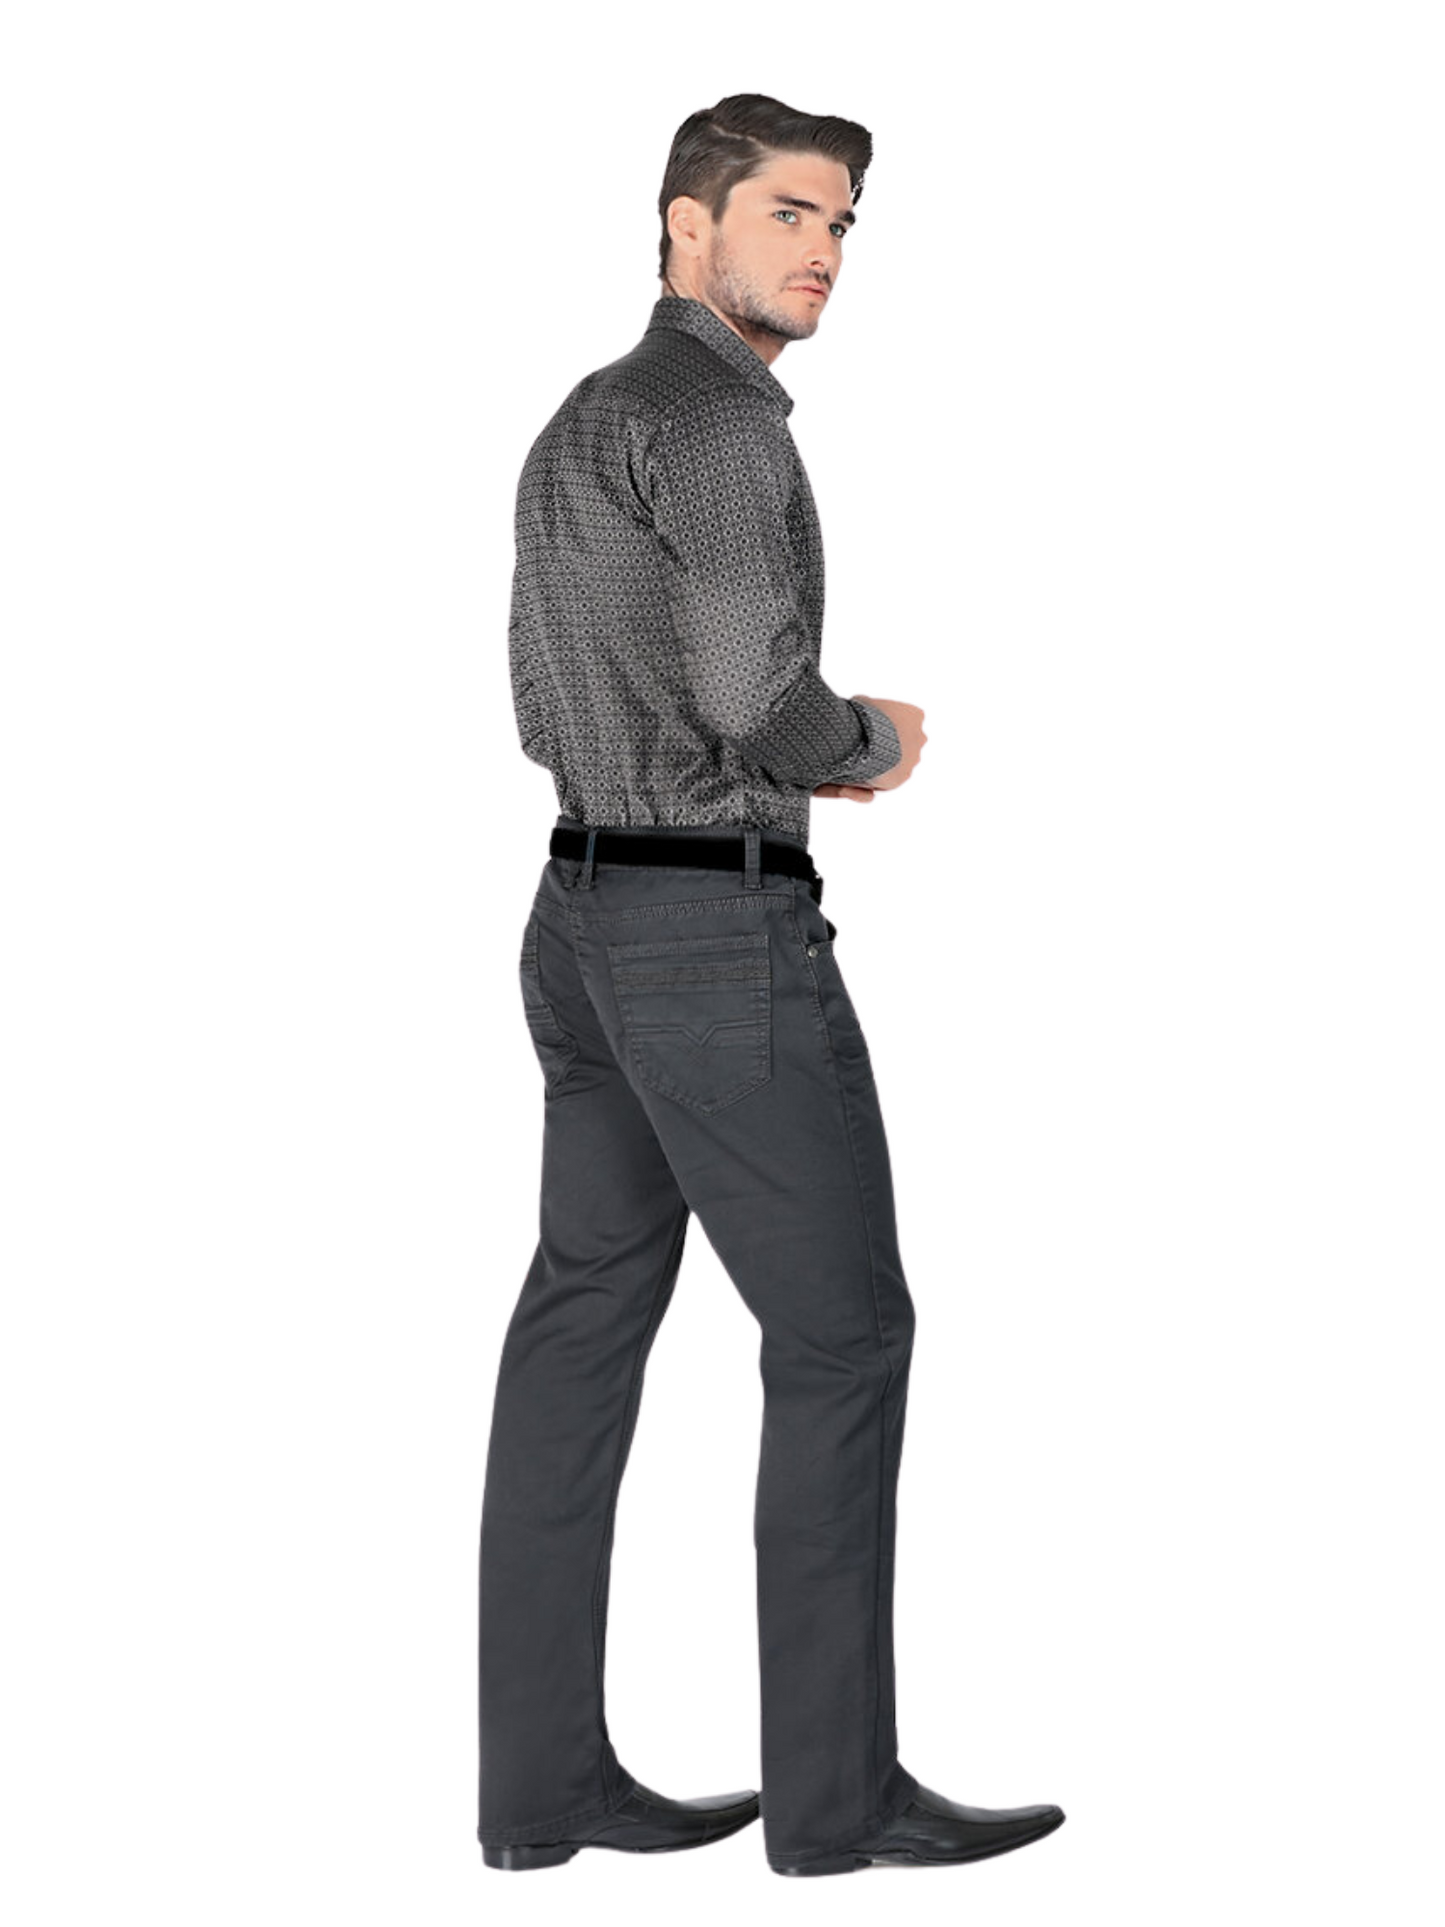 Stretch Denim Jeans for Men 'Montero' - ID: 5601 Denim Jeans Montero